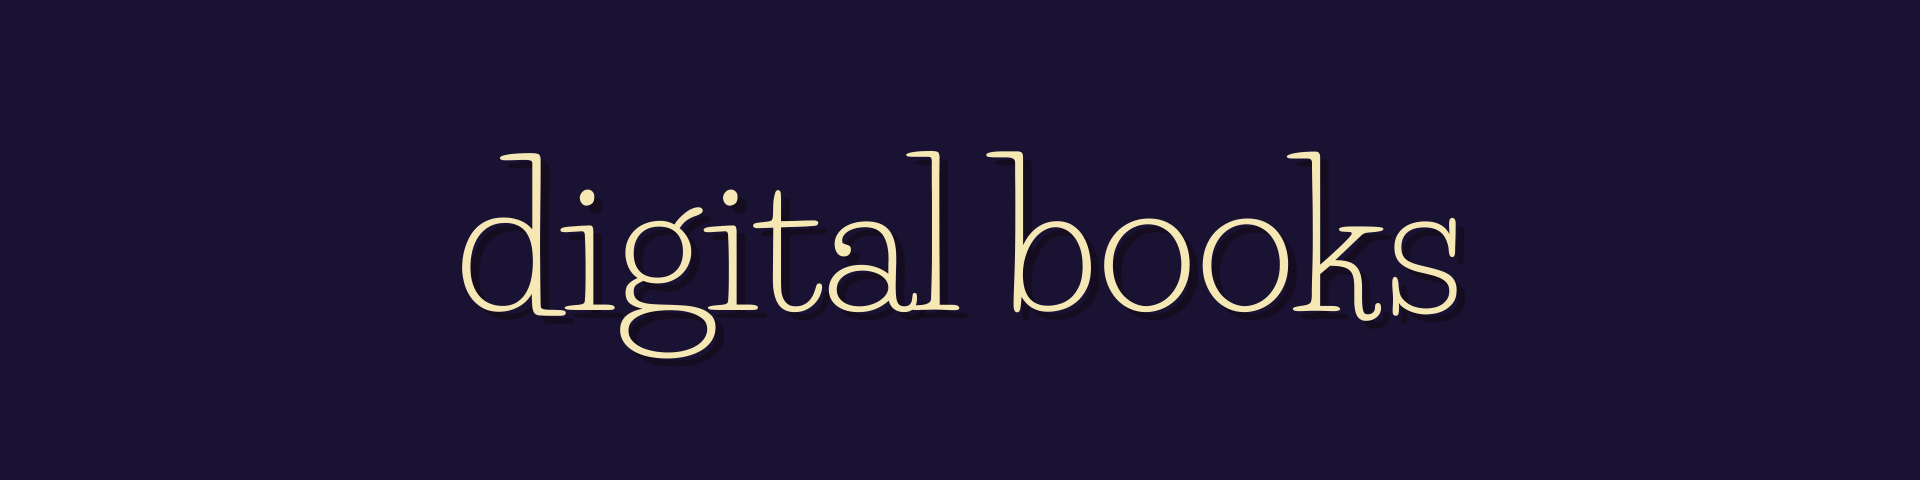 digital books